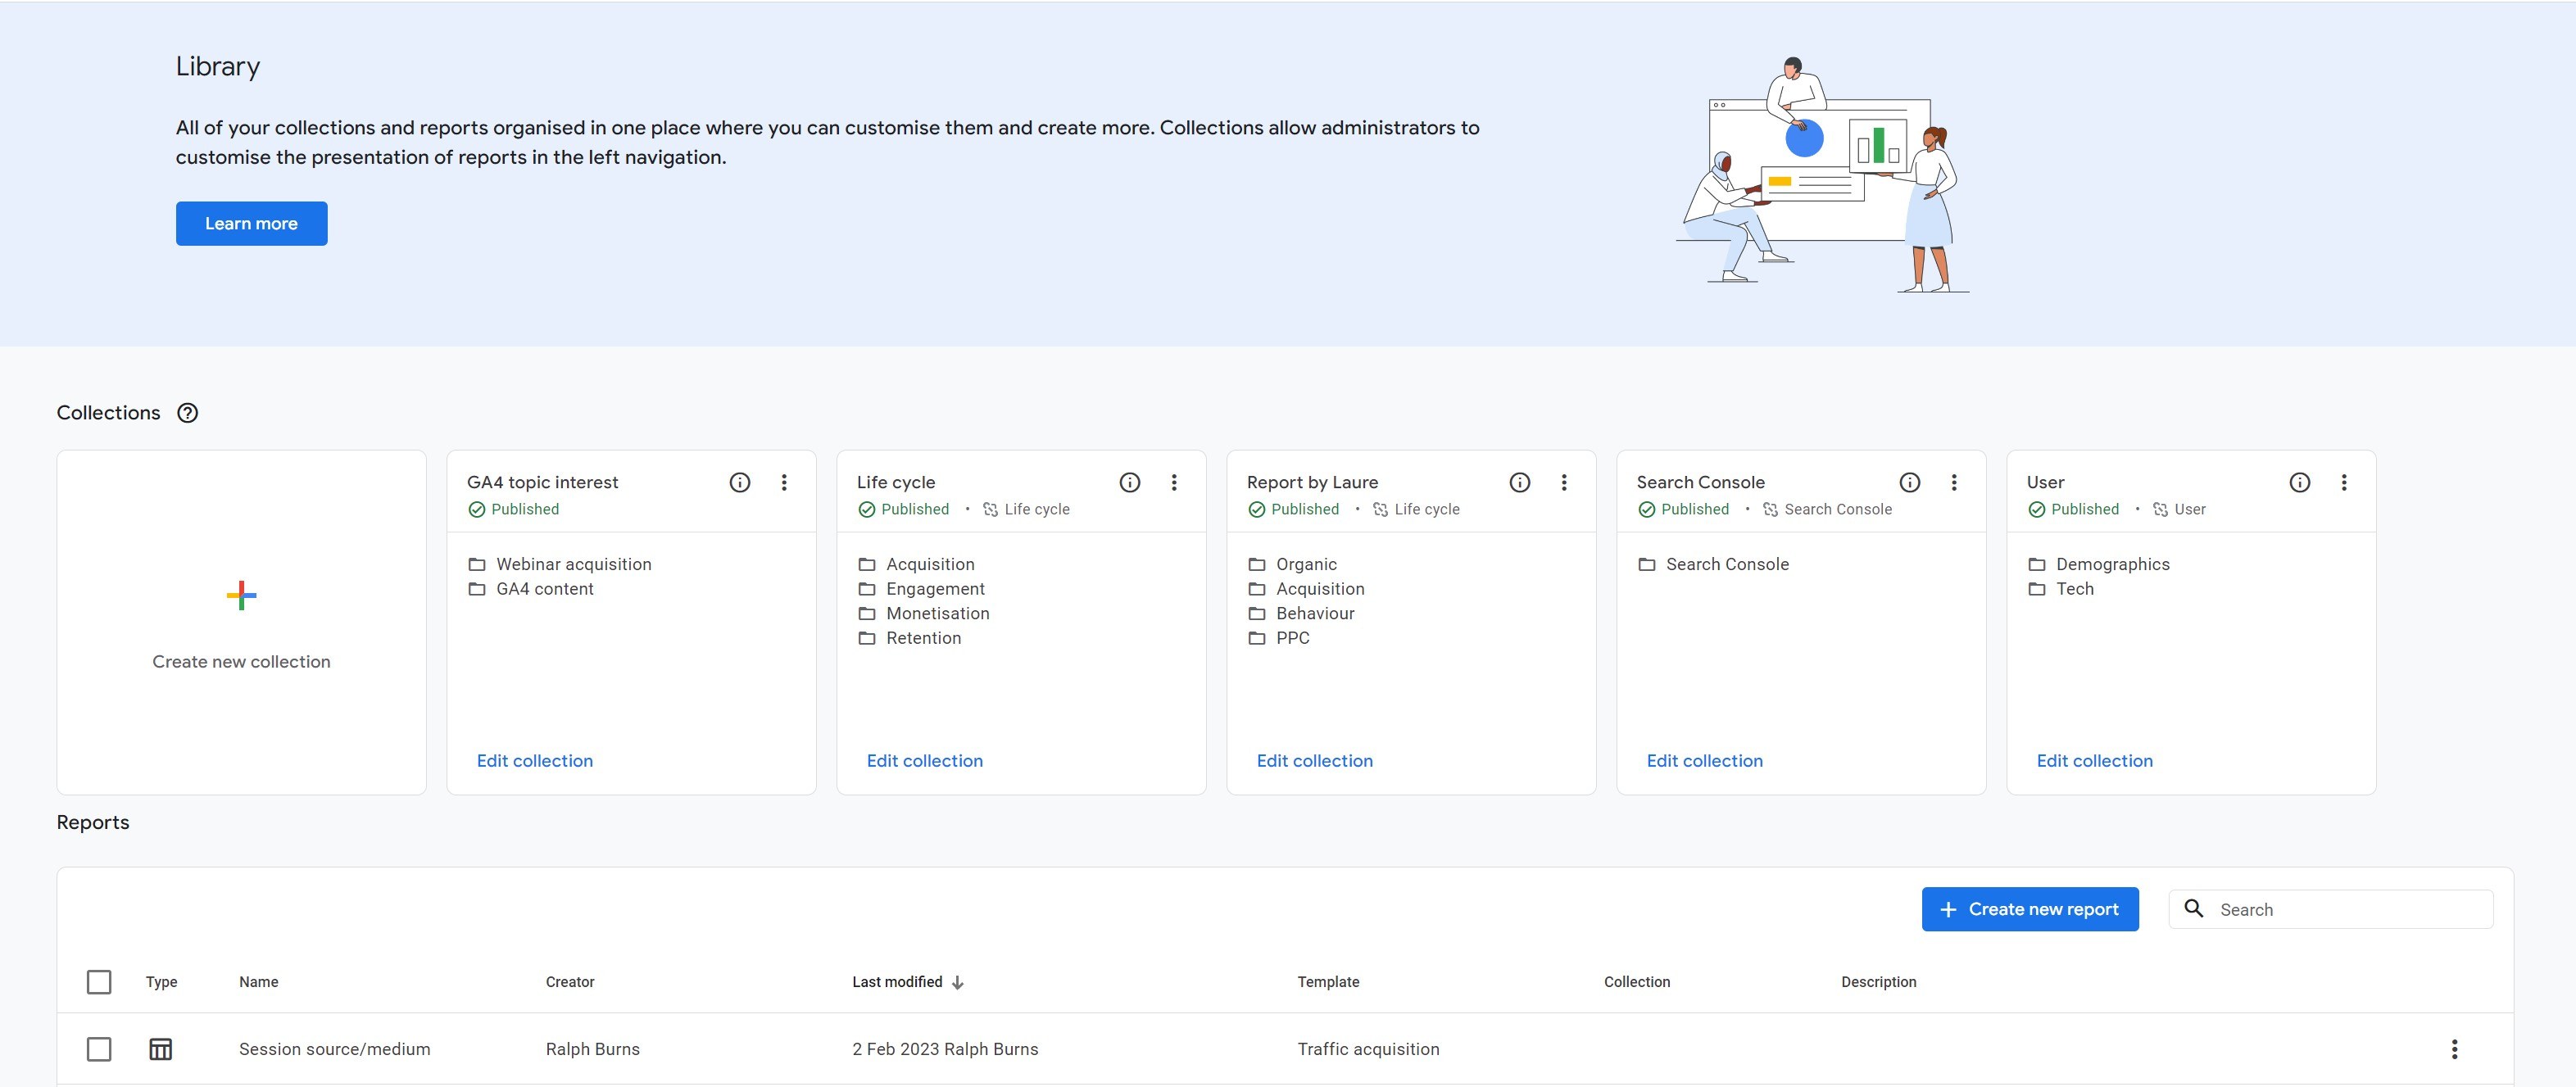 Google analytics 4 report customisation library details image